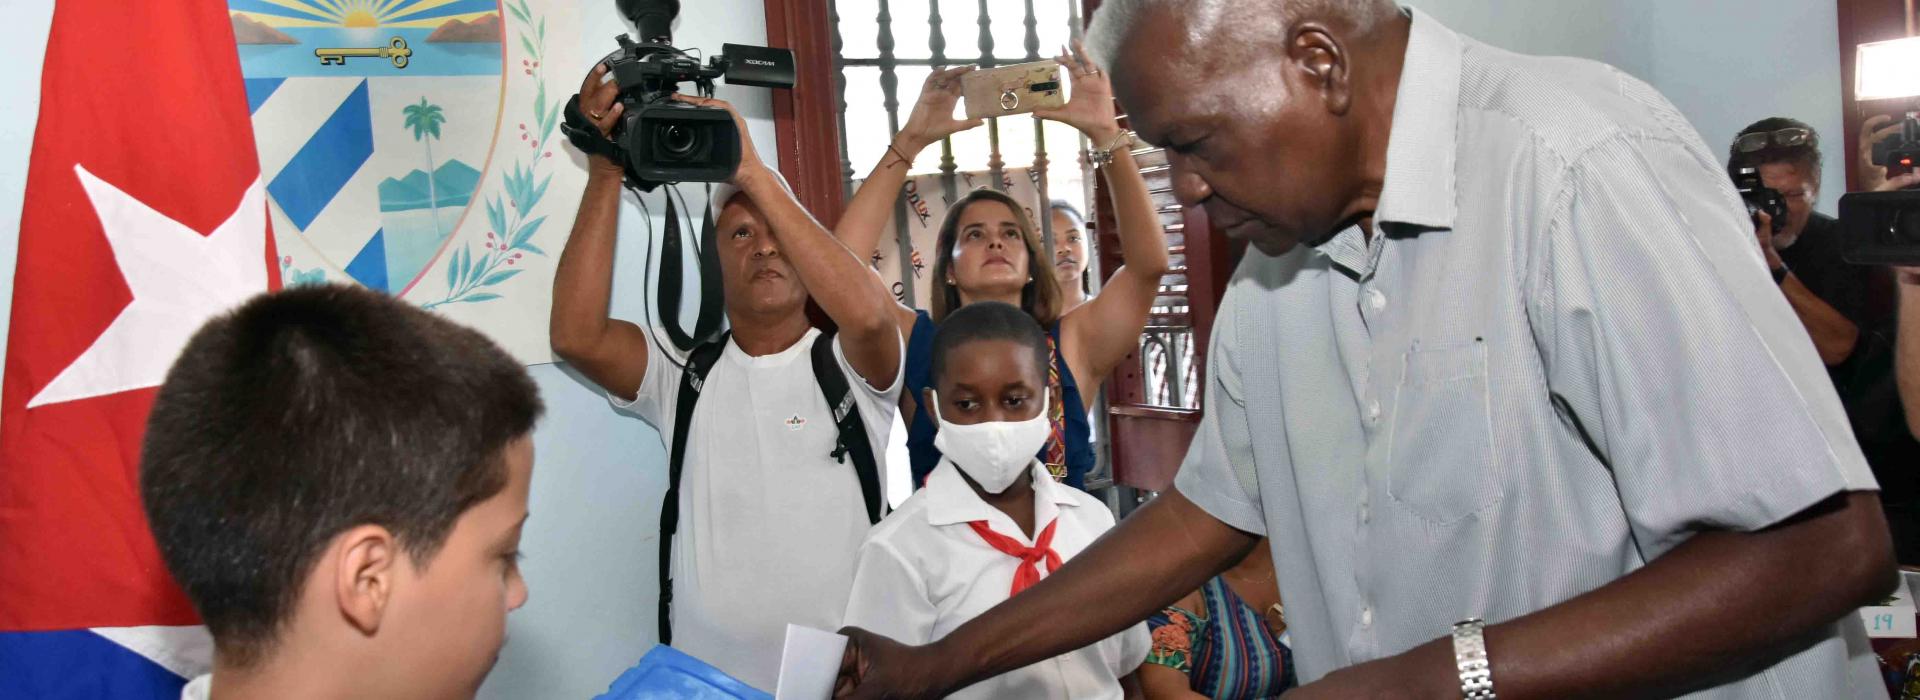 Esteban Lazo: Este 25 de septiembre vivimos un momento trascendental en la historia de Cuba